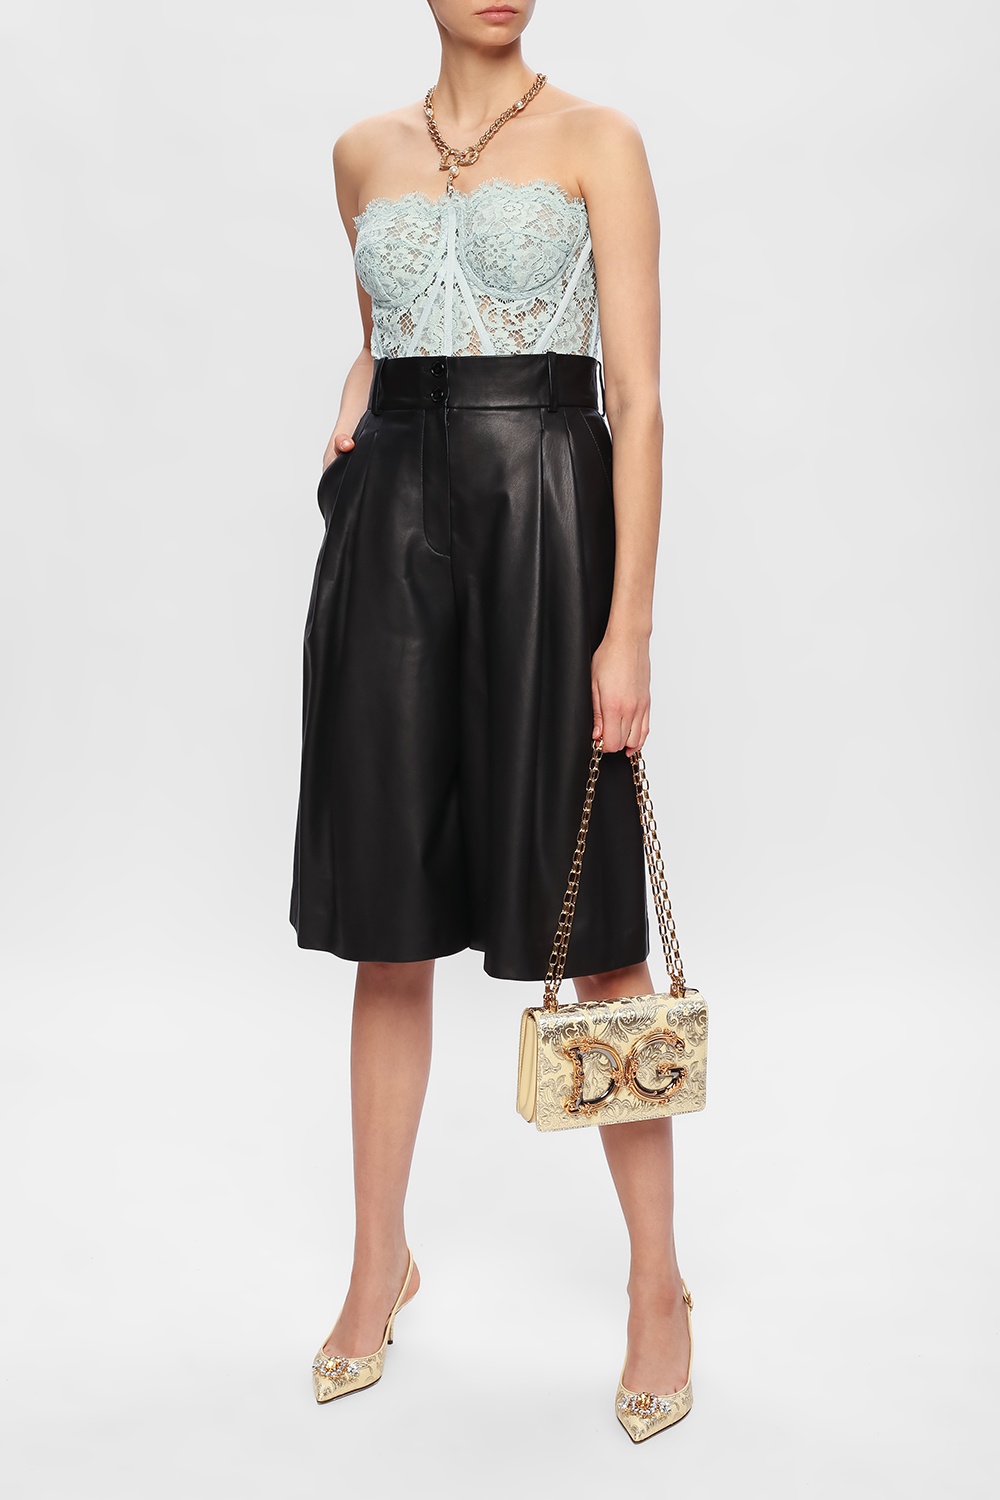 Dolce & Gabbana Openwork corset